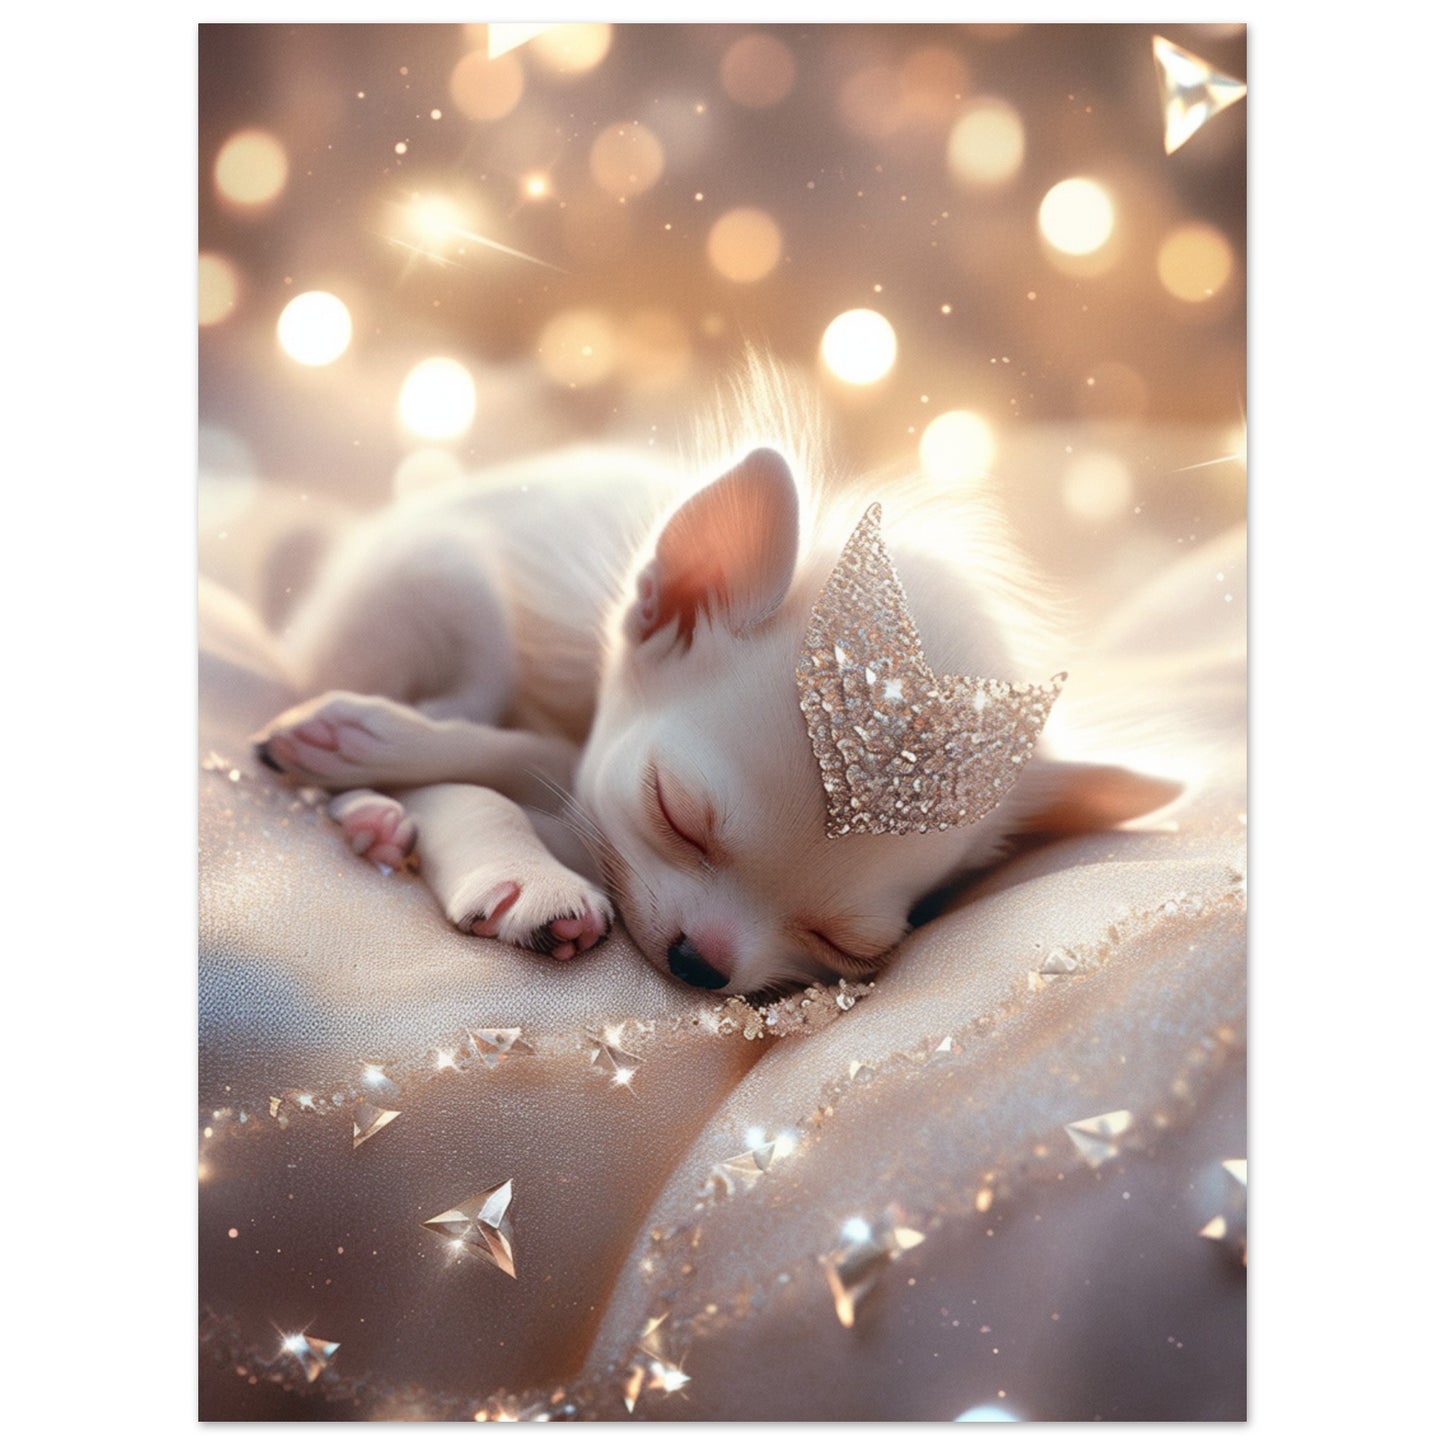 Sleeping Chihuahua | Original Art Print | |Premium Matte Paper Poster | 12"x 16"